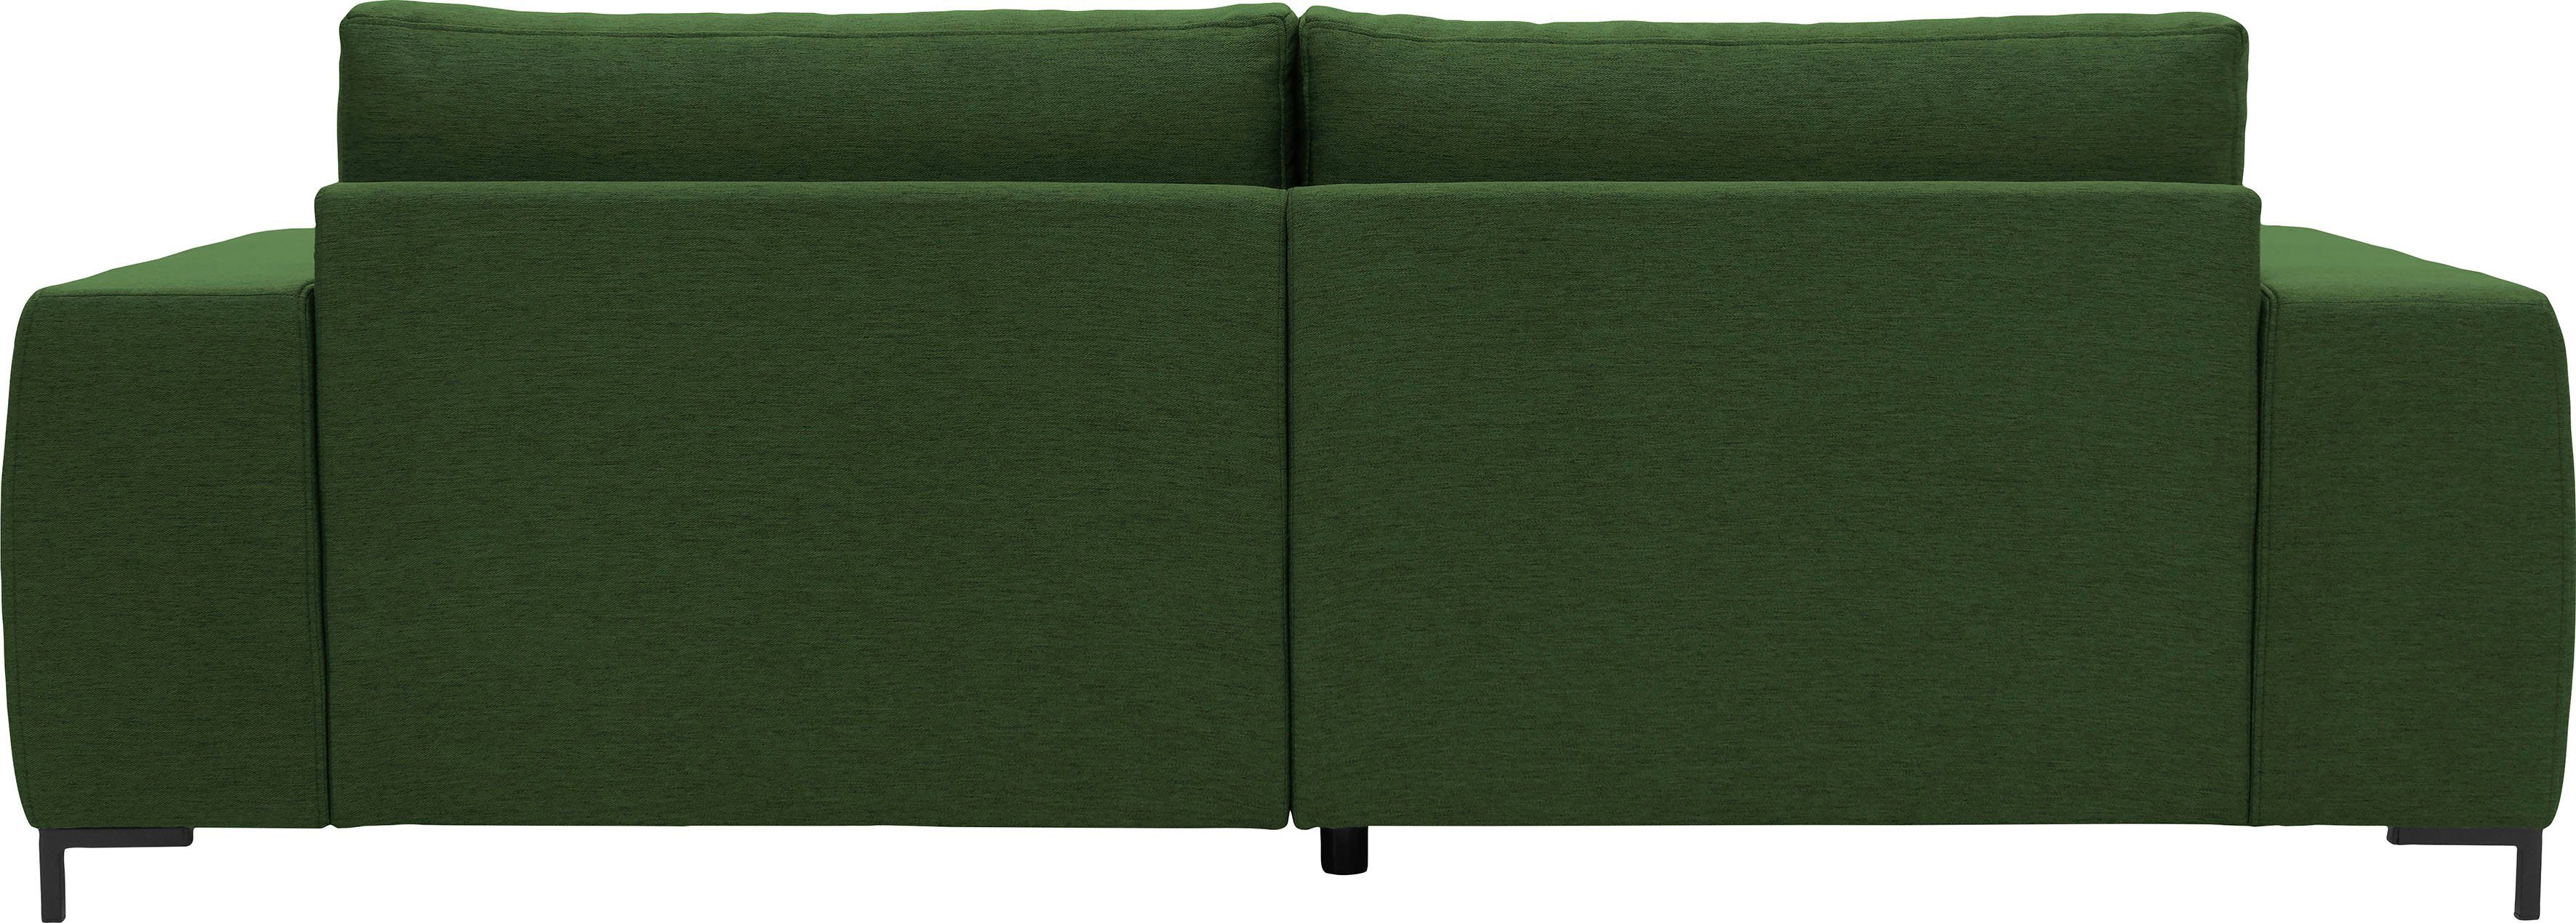 2 Wolfgang Joop Big-Sofa gerade Linien, in by Looks Bezugsqualitäten VI, LOOKS